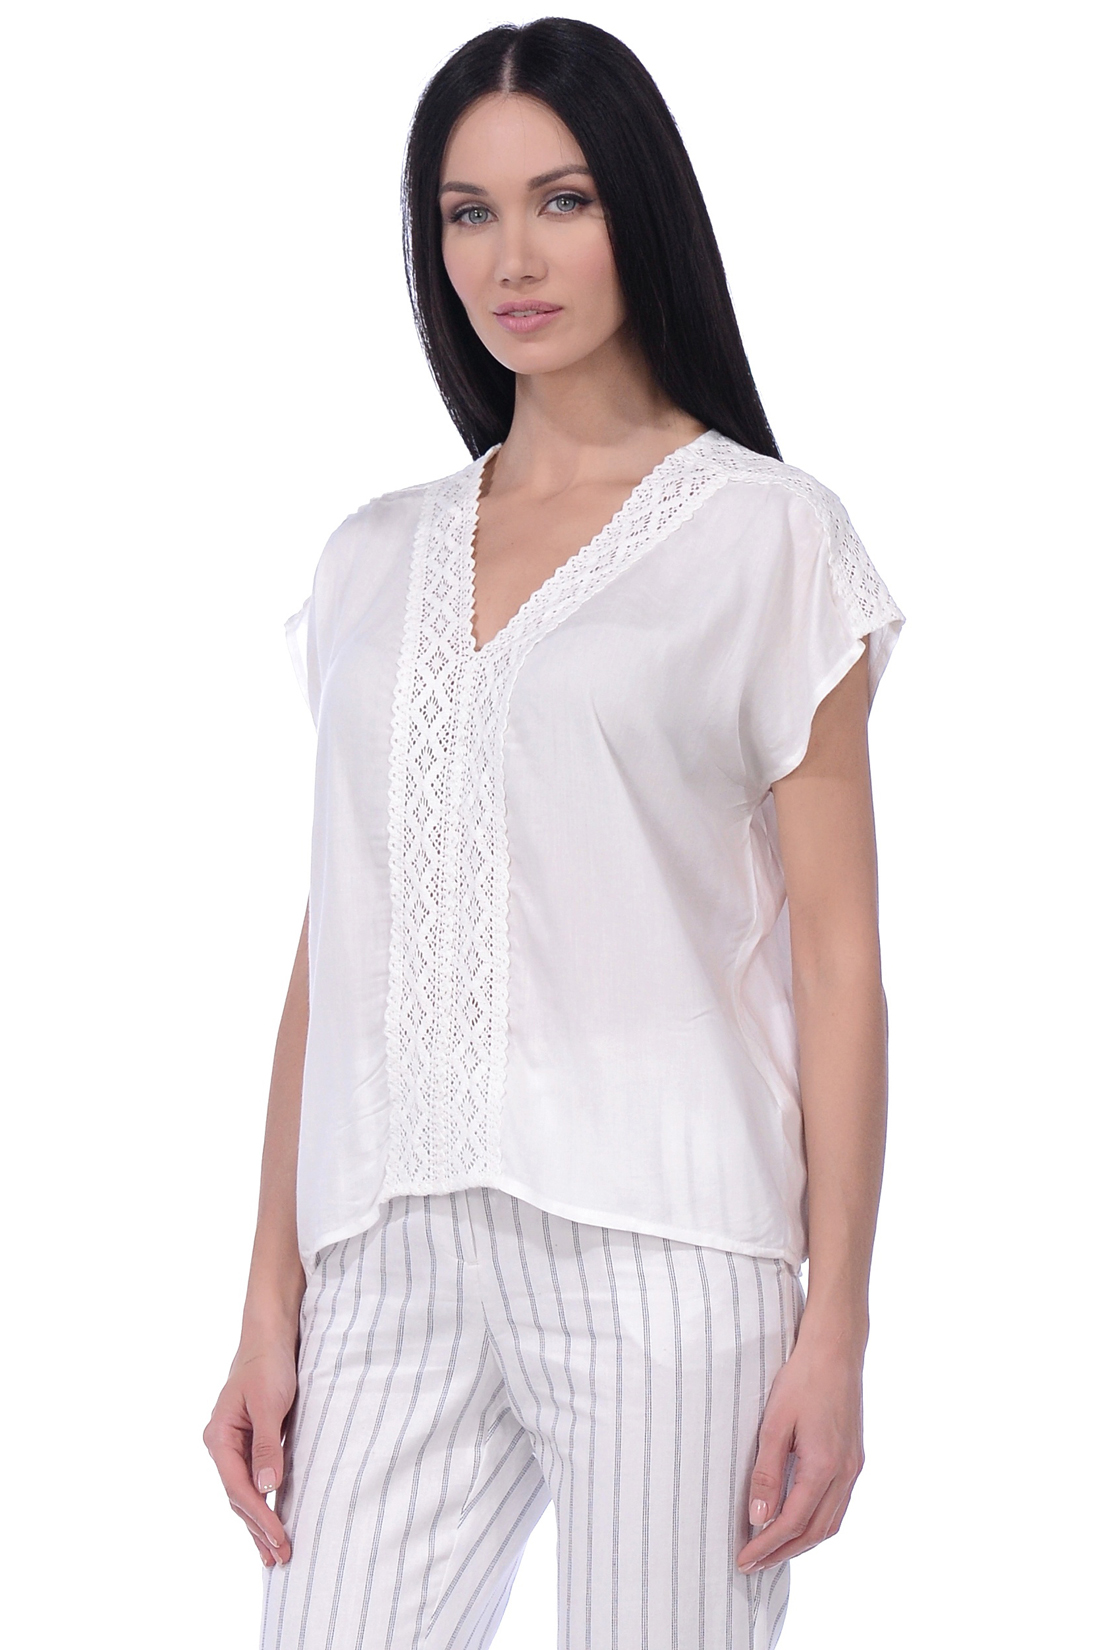 Белая блузка из вискозы (арт. baon B199058), размер S, цвет белый Белая блузка из вискозы (арт. baon B199058) - фото 1